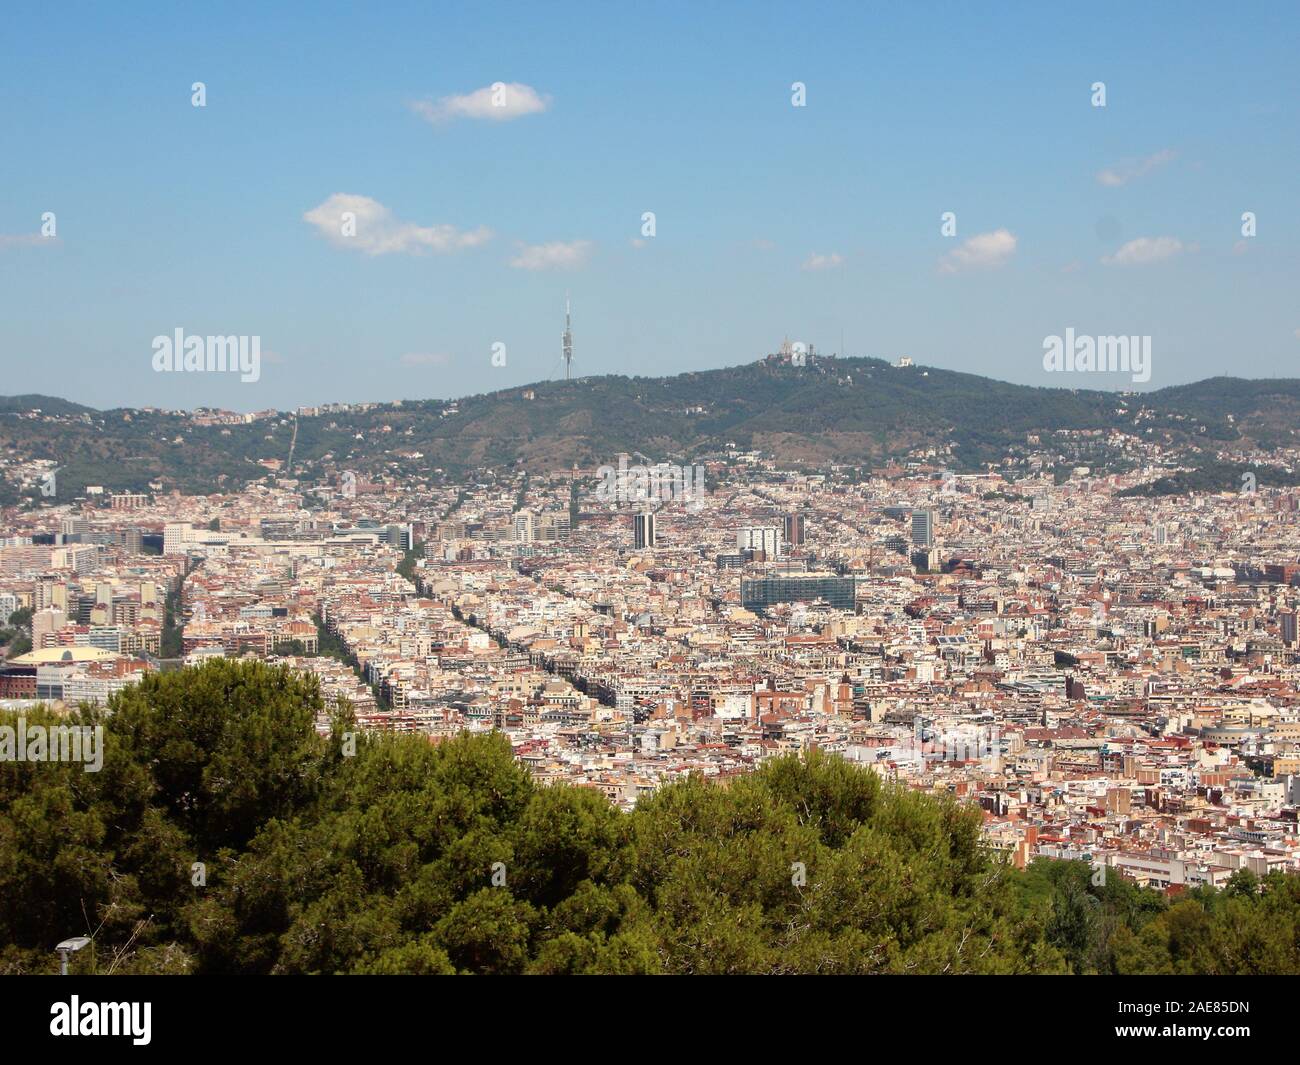 Mountain Ponaramic View with Sagrada Familia Barcelona in Background. Smog is hiding the mountains. Stock Photo